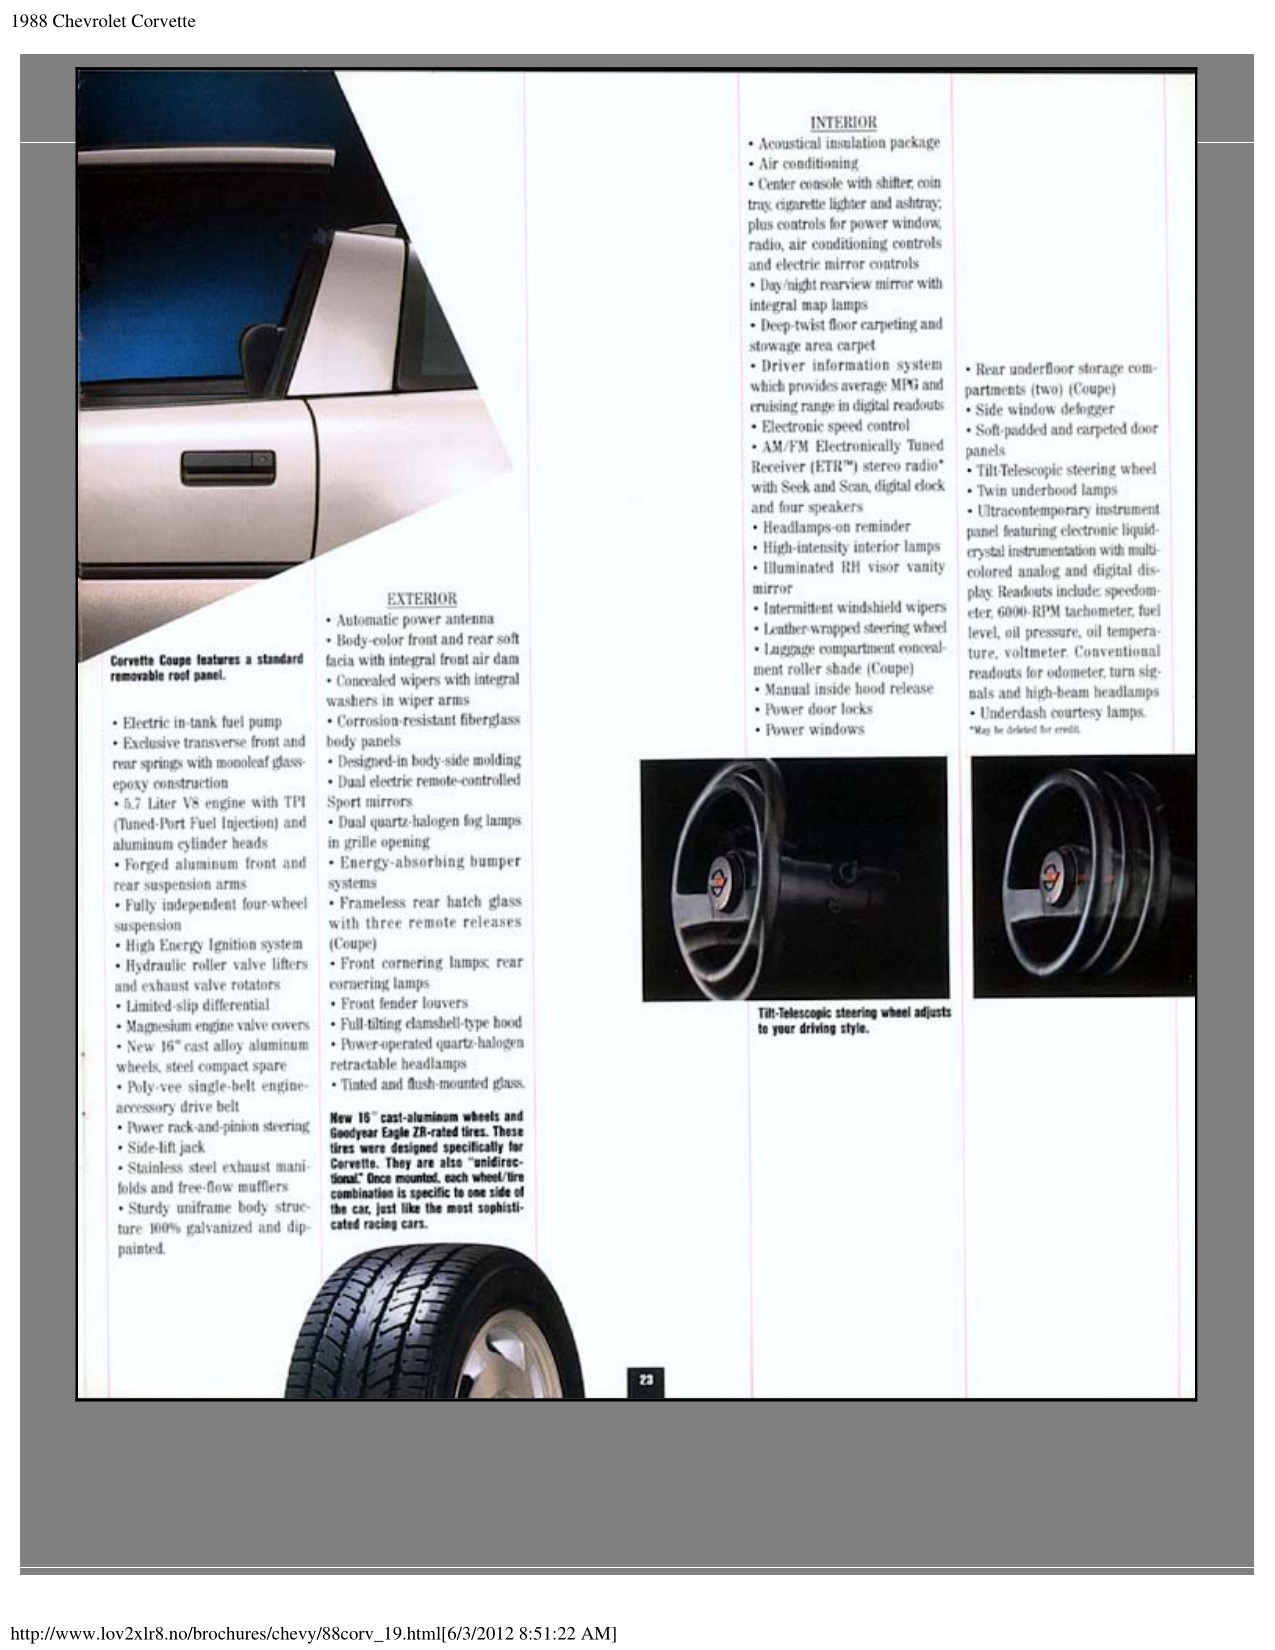 1988 Corvette Brochure Page 1